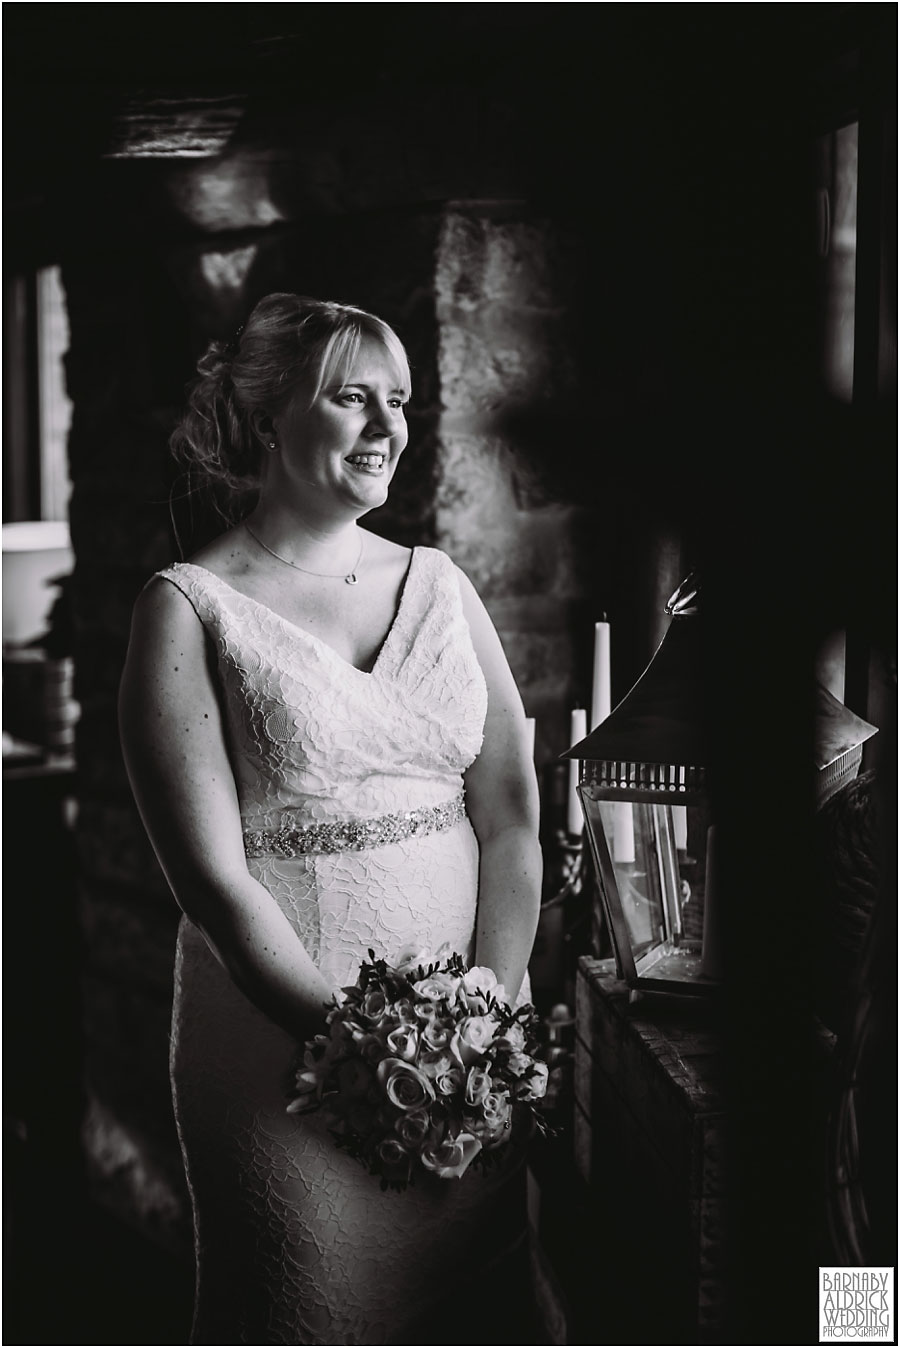 Star Inn Harome Wedding Photography,Barnaby Aldrick Wedding Photography,North Yorkshire Wedding Photographer,